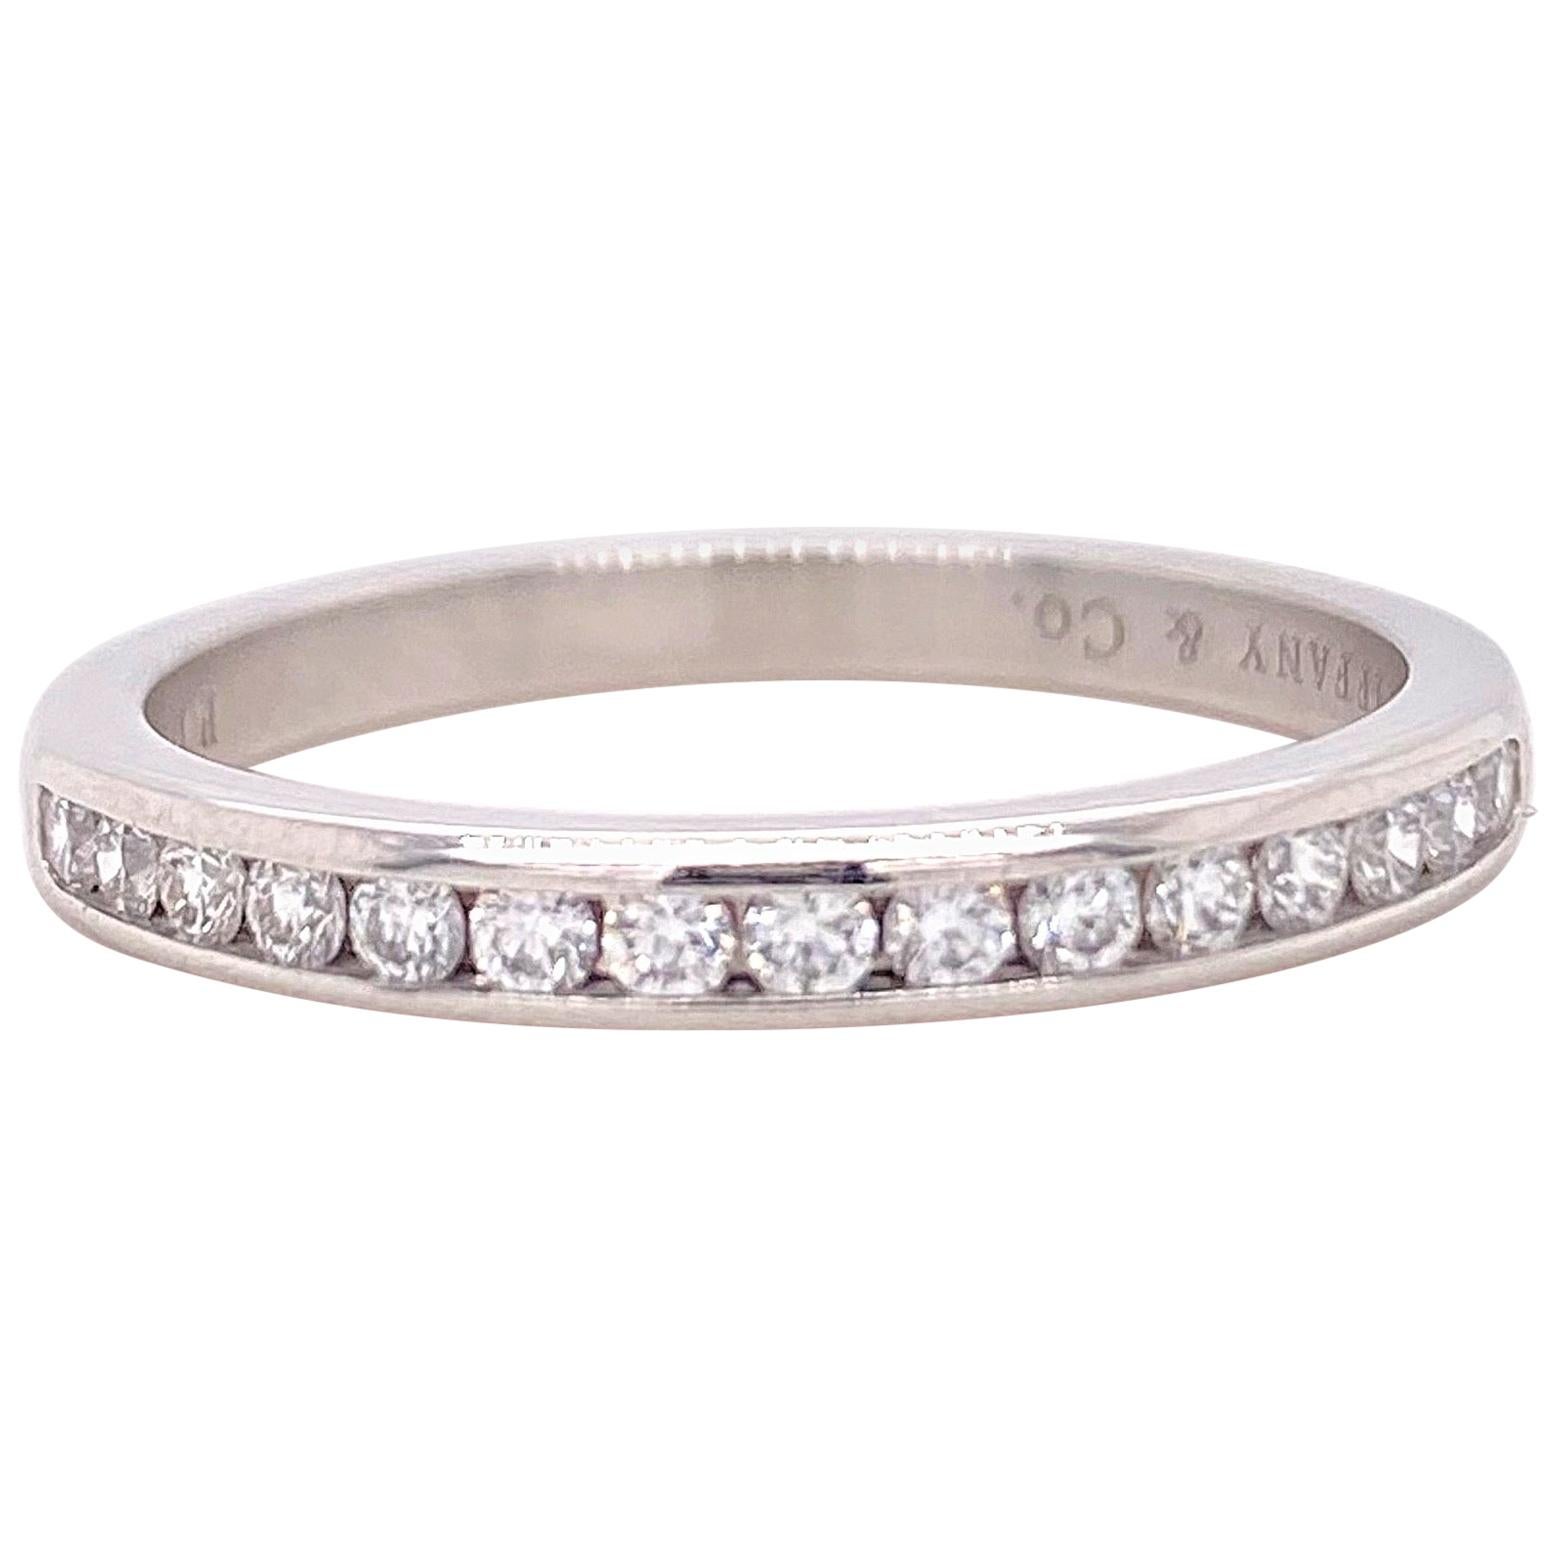 Tiffany & Co. Runder Diamant-Hochzeitsring mit Kanalbesatz 0,24 Karat Platin